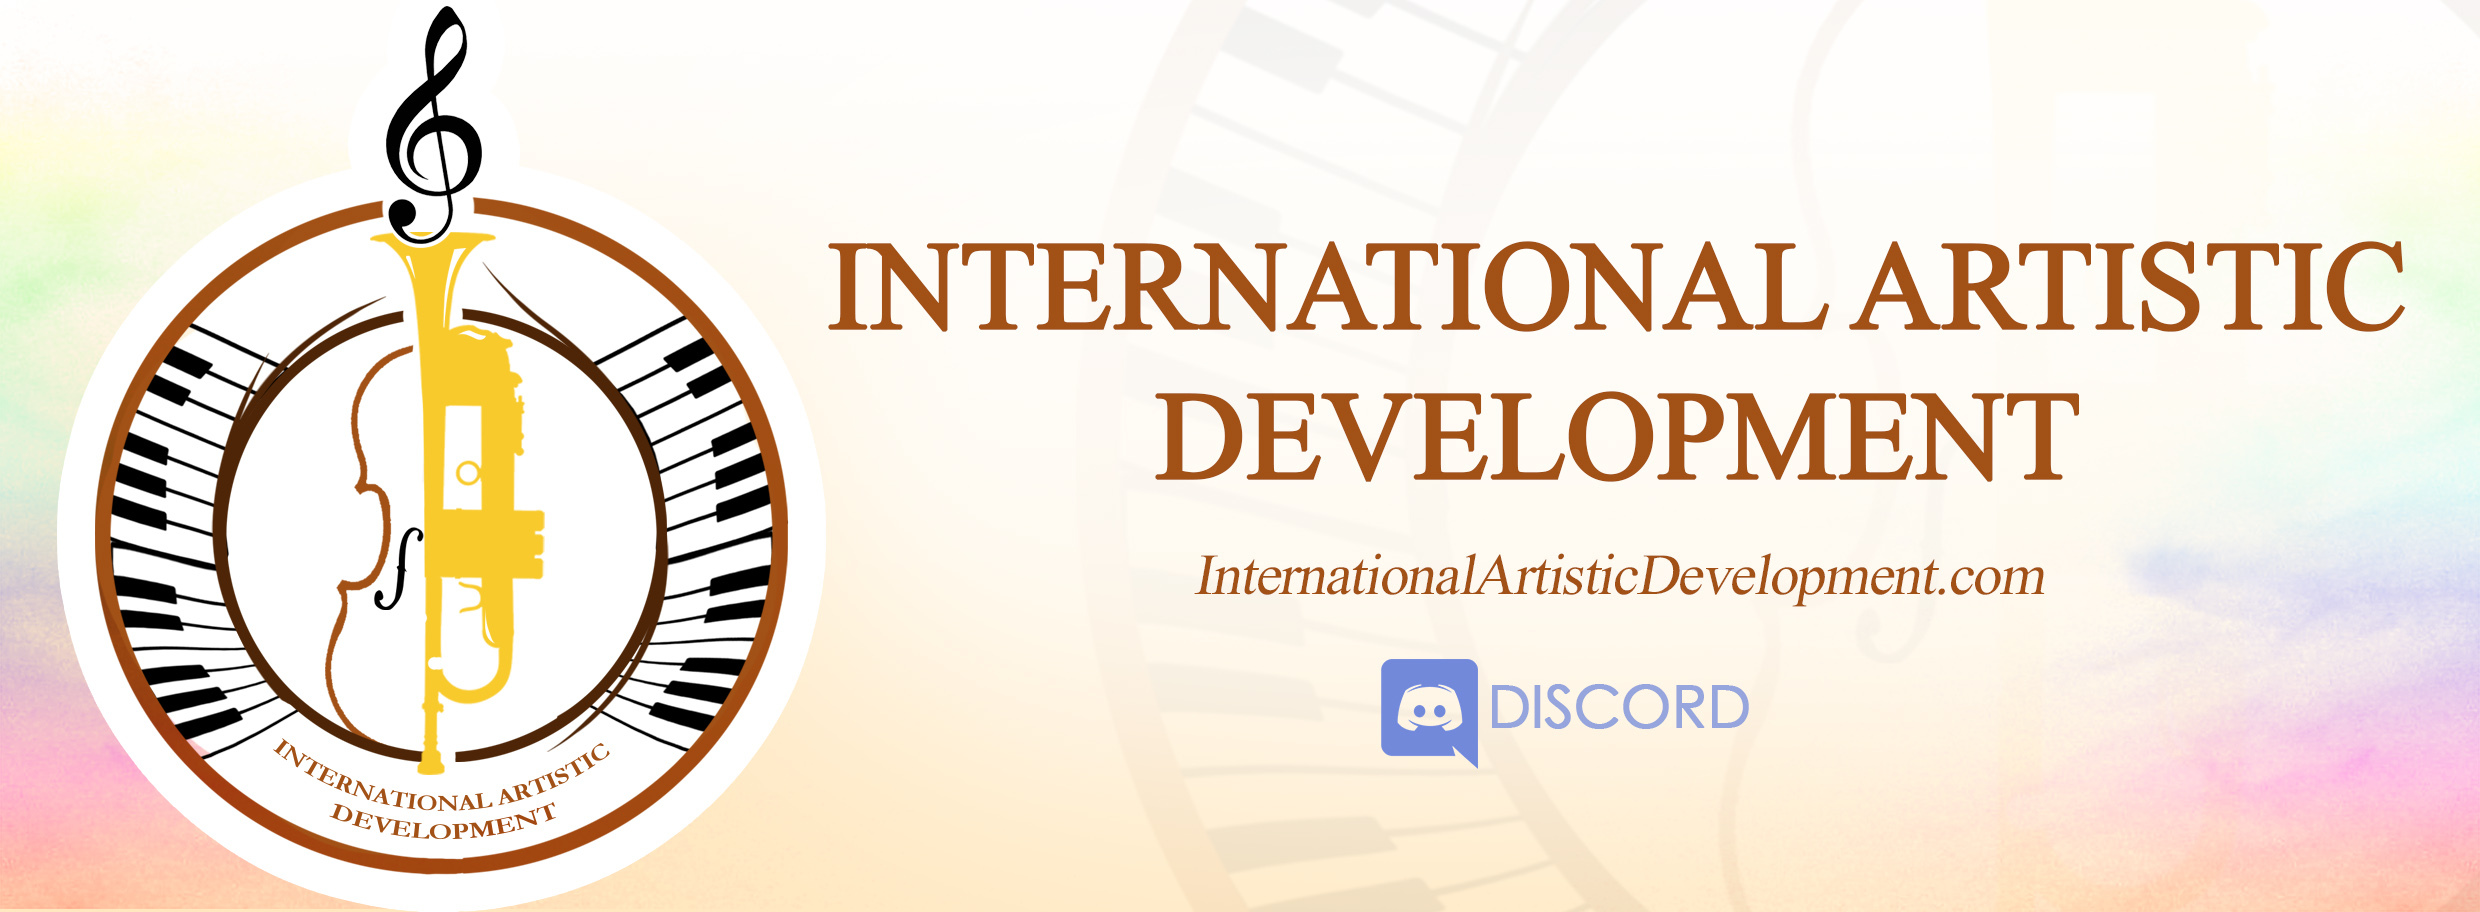 International Artistic Development